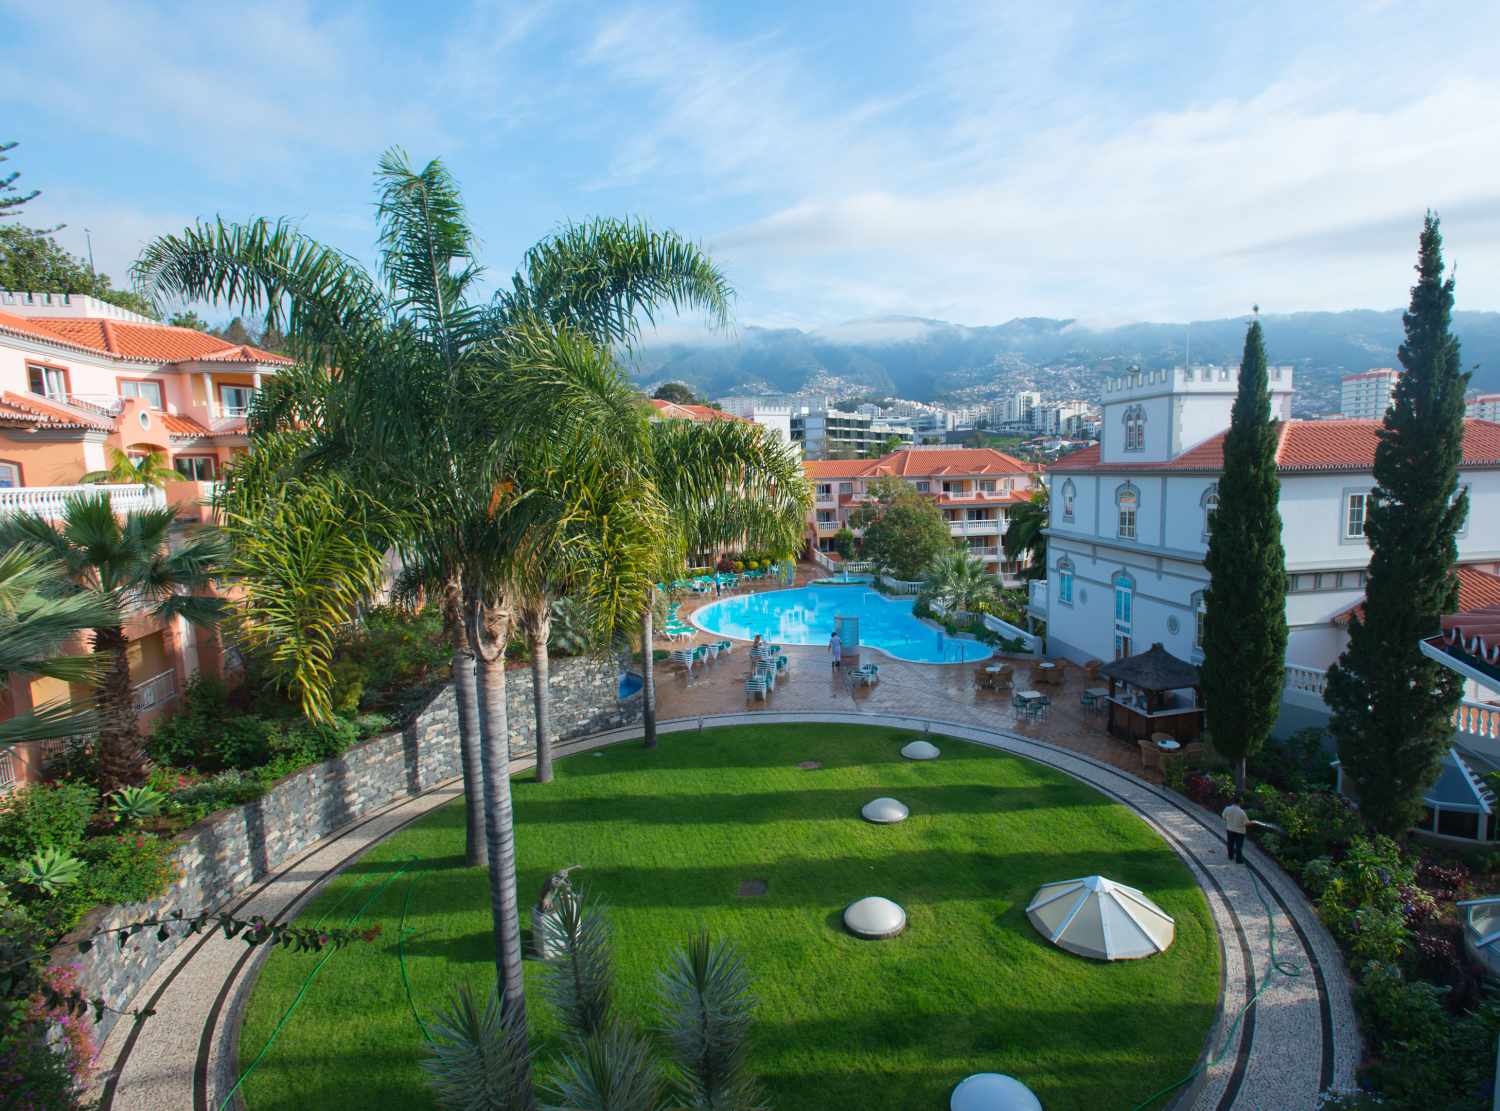 Pestana Village Garden Hotel, Funchal, Madeira, Portugal